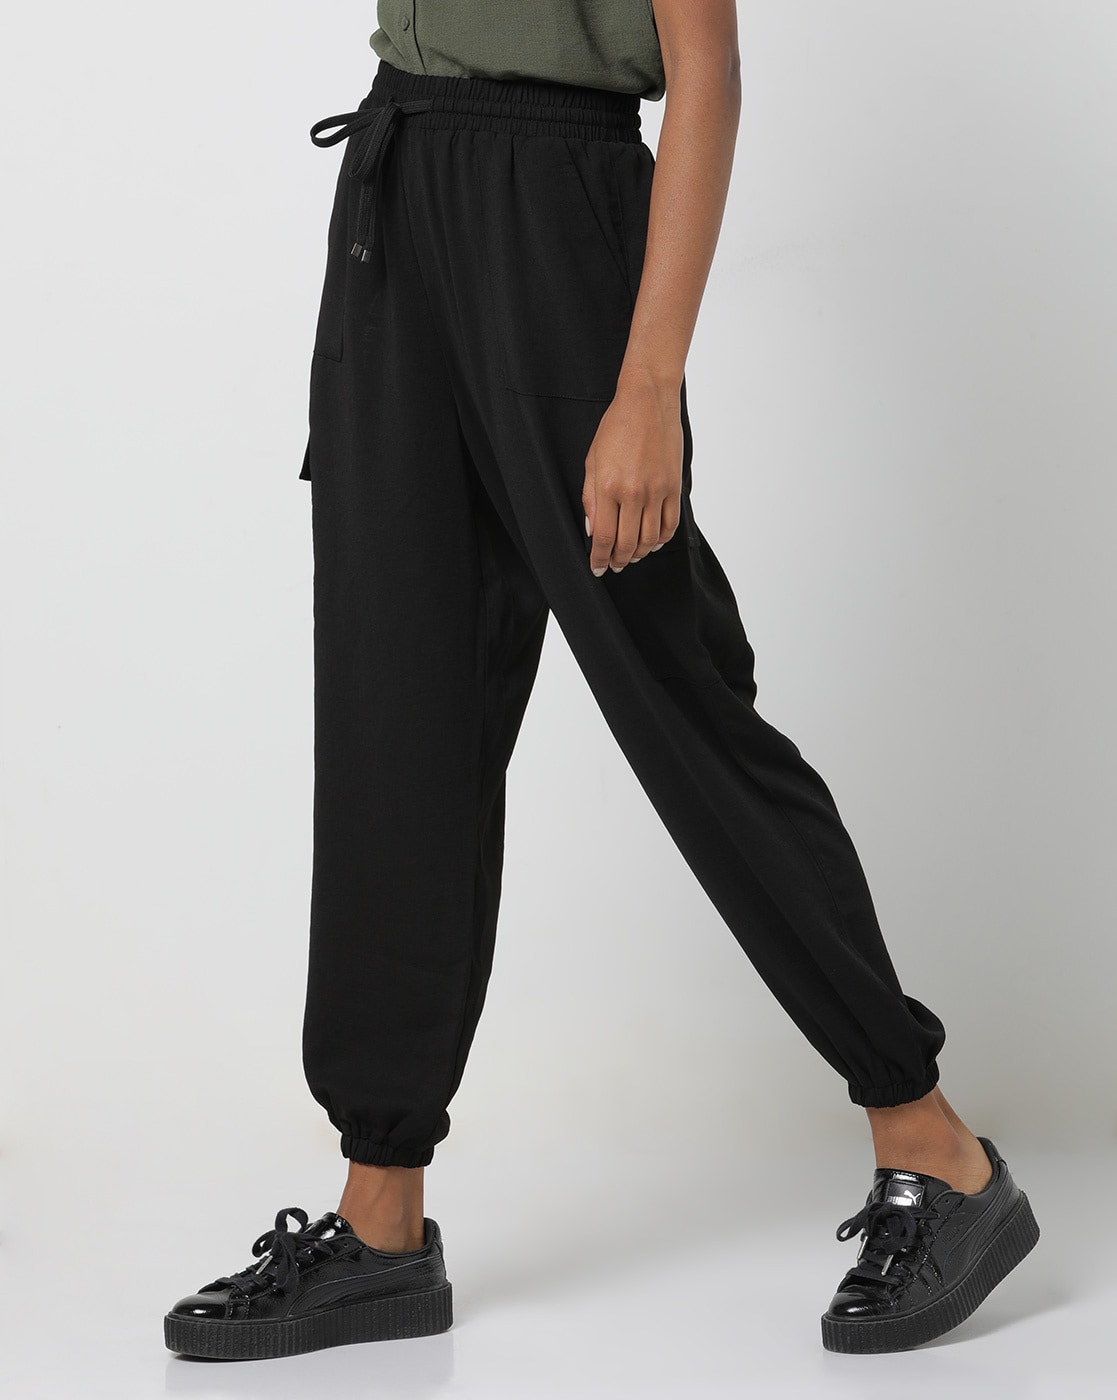 Buy Black Trousers  Pants for Women by RIO Online  Ajiocom